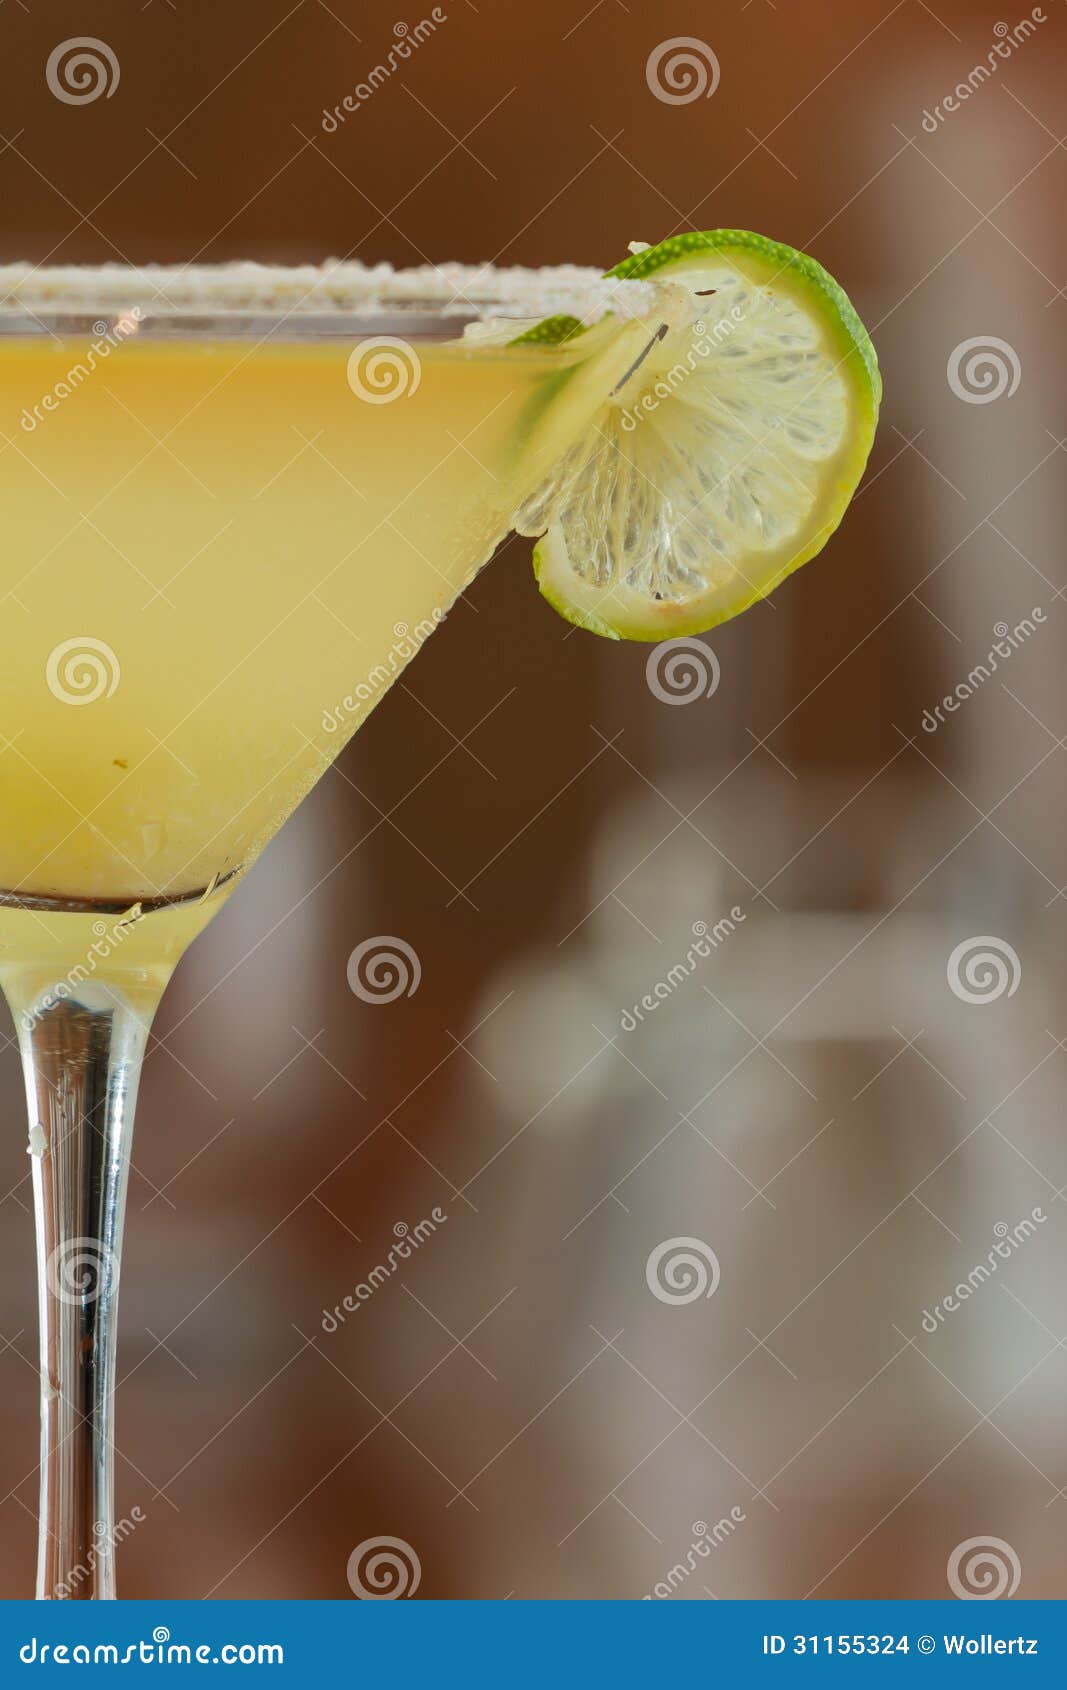 Margarita martini stock photo. Image of alcohol, martini - 31155324